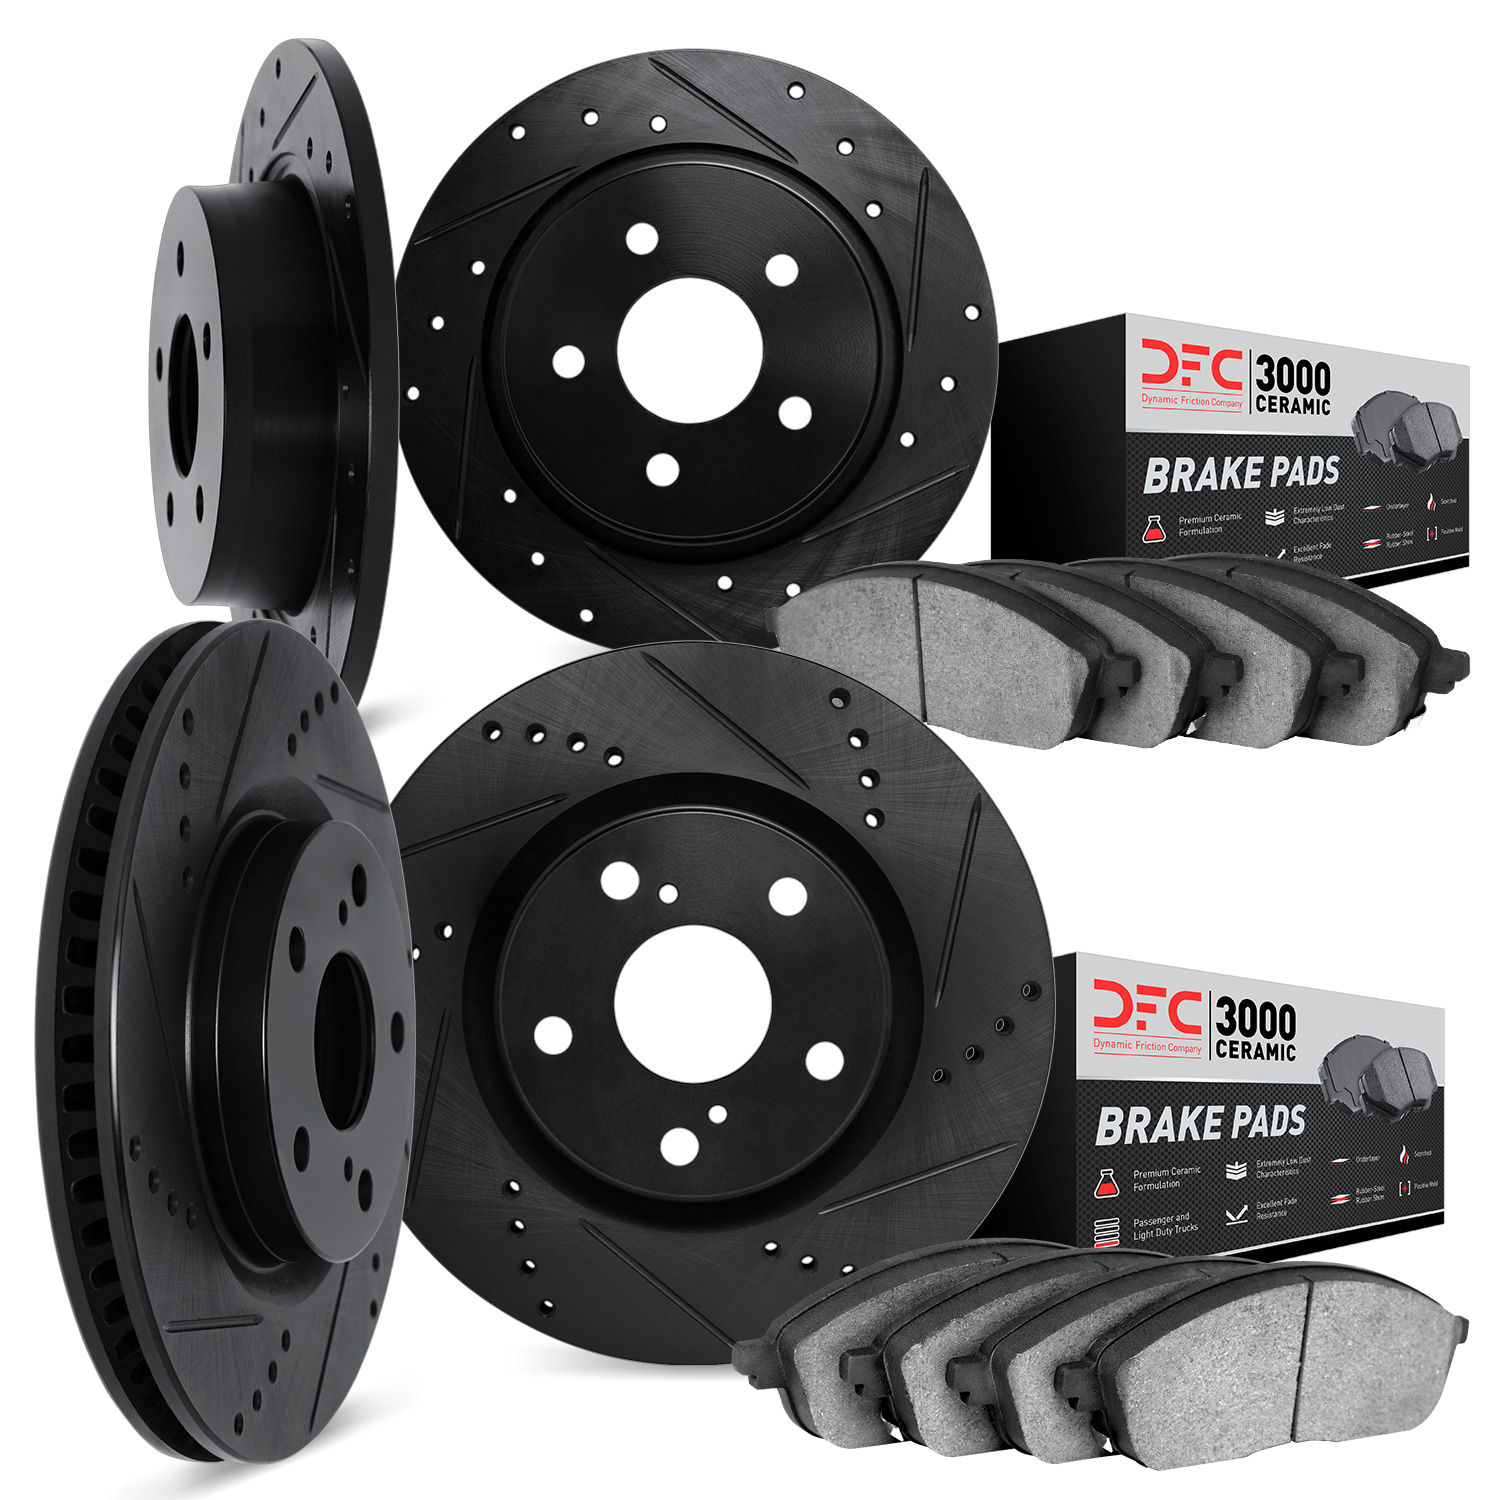 8304-54116 Drilled/Slotted Brake Rotors with 3000-Series Ceramic Brake Pads Kit [Black], 2015-2019 Ford/Lincoln/Mercury/Mazda, P